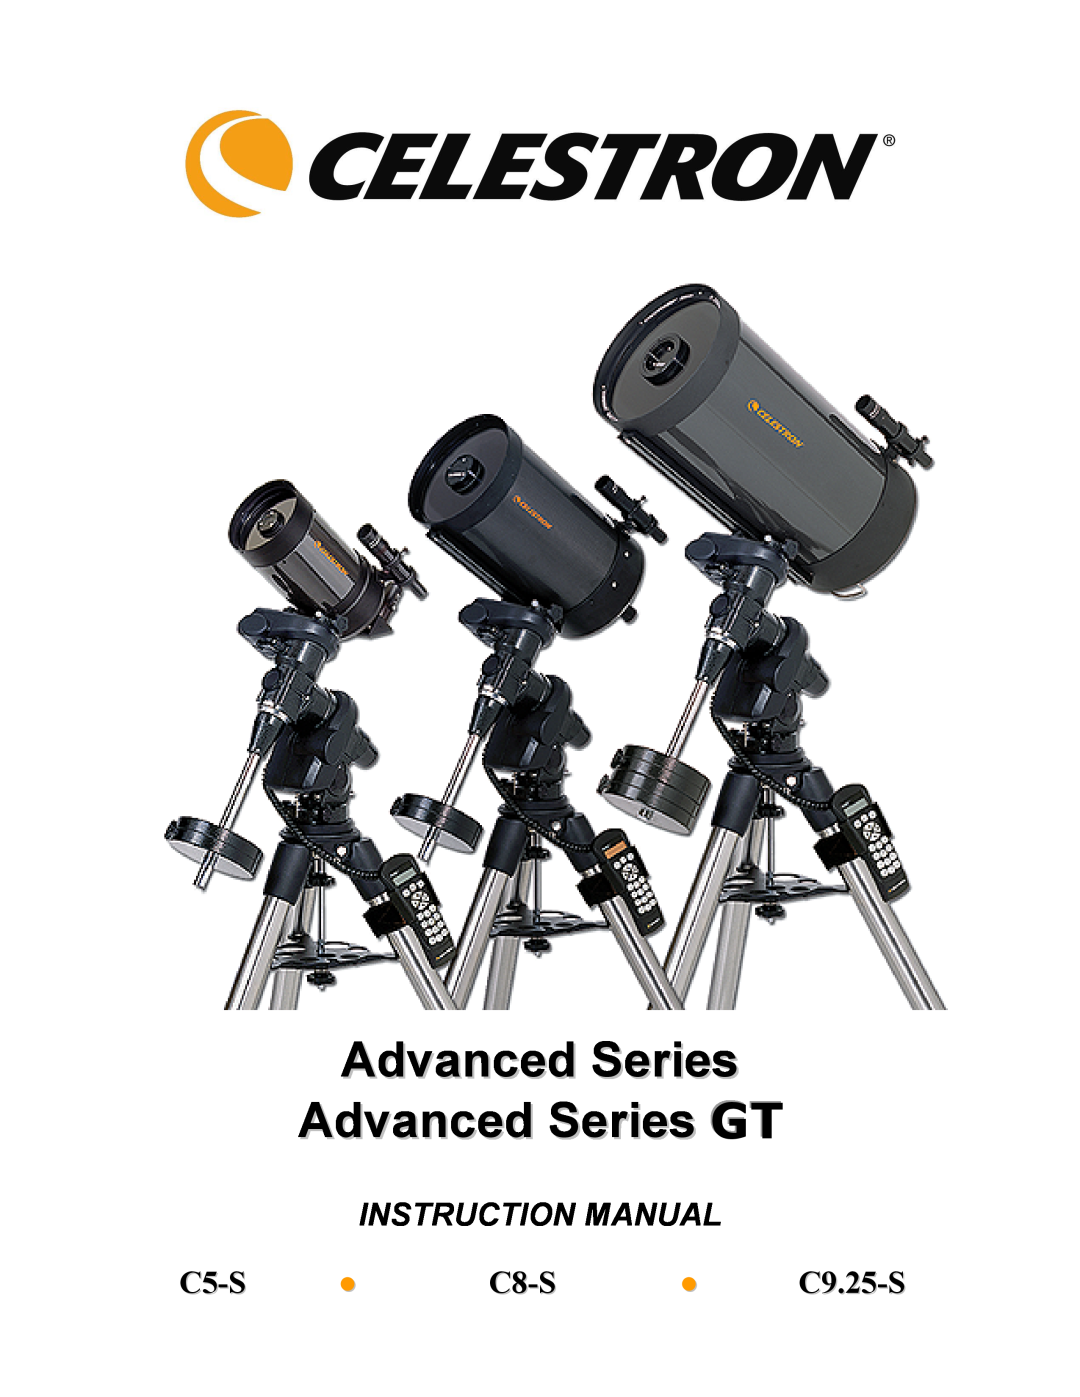 Celestron instruction manual C5-S C8-S C9.25-S, Advanced Series Advanced Series GT 